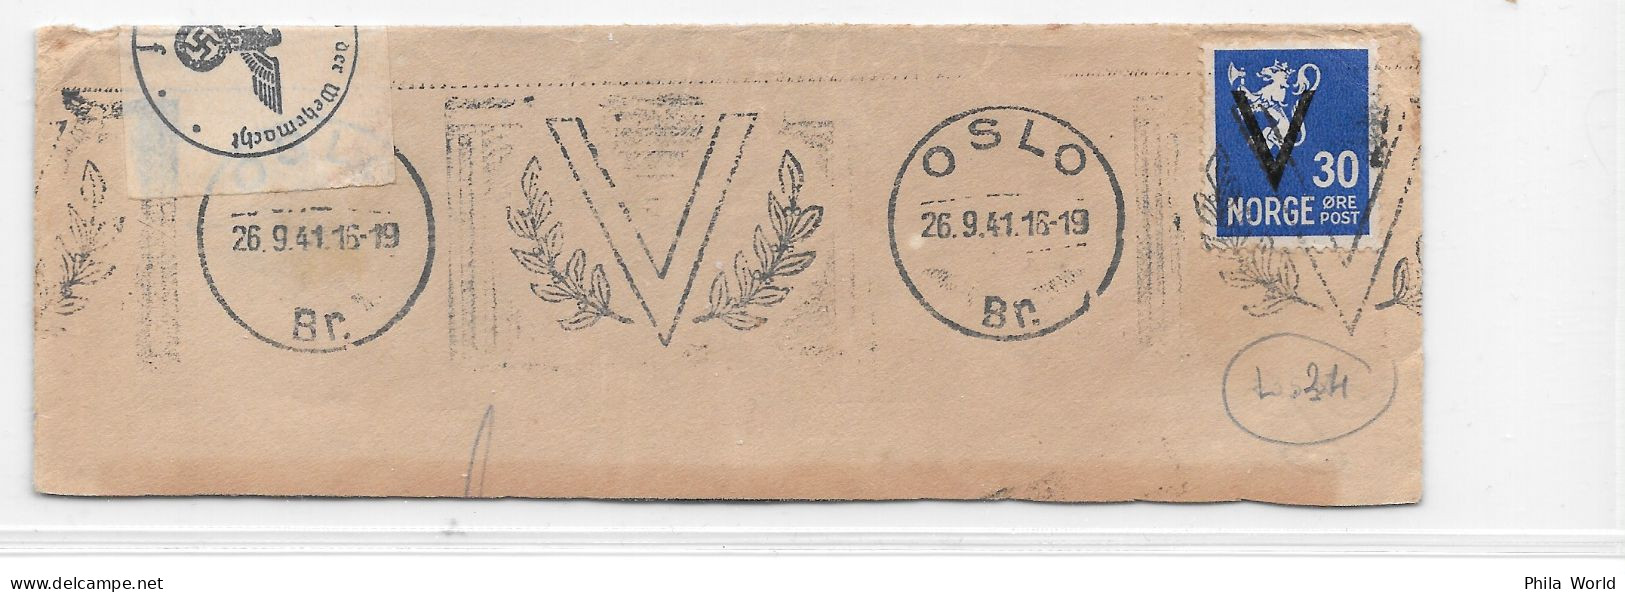 WW2 NORGE NORVEGE NORWAY 1941 Fragment Devant Lettre Oslo V Overprint Surcharge 30 C LION + Cancel Germany Censorship - Briefe U. Dokumente